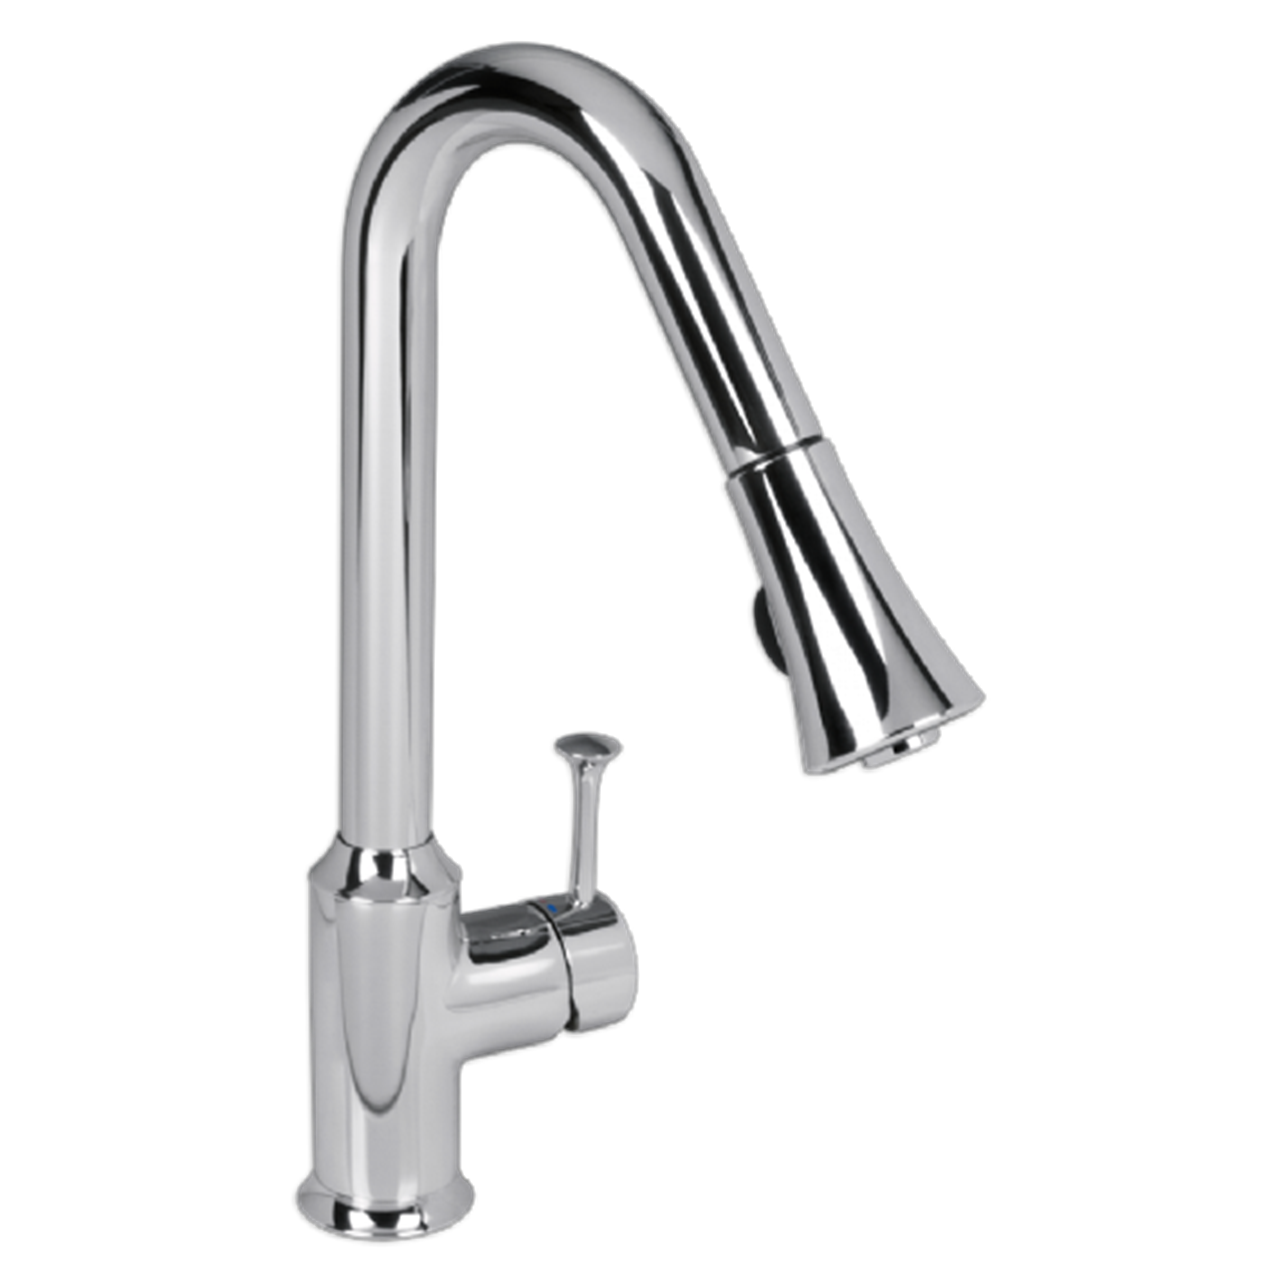 Faucet clipart broken sink. Pekoe handle pull down